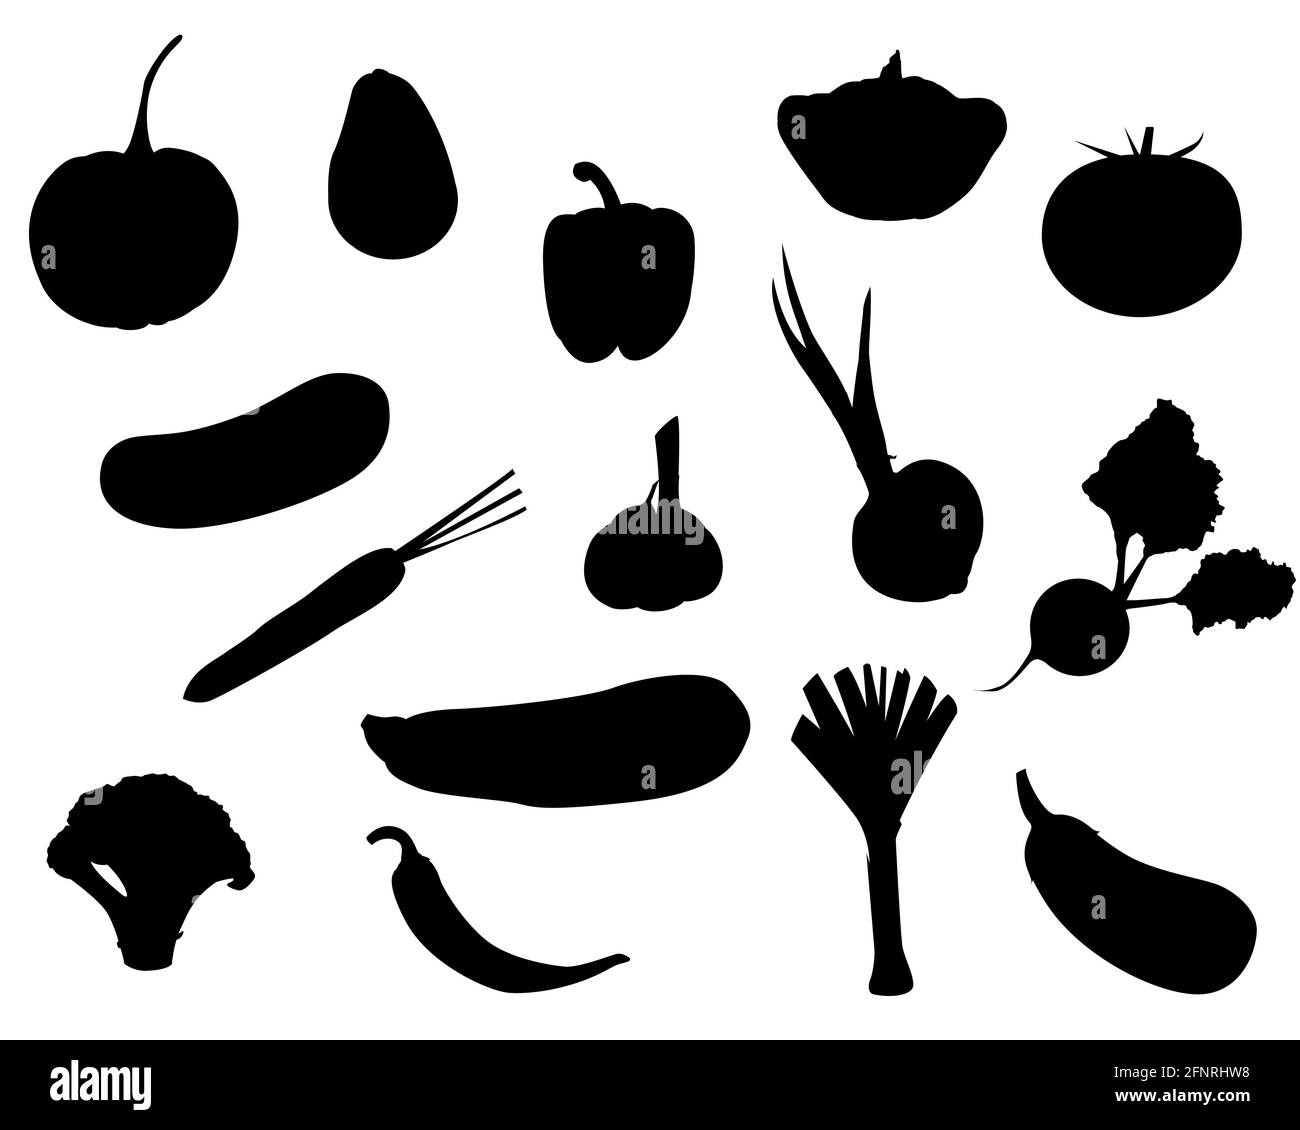 a set of vegetable silhouettes. onion, garlic, beetroot, avocado, pumpkin, broccoli eggplant, leek, pepper, squash, squash chili pepper vector isolate Stock Vector